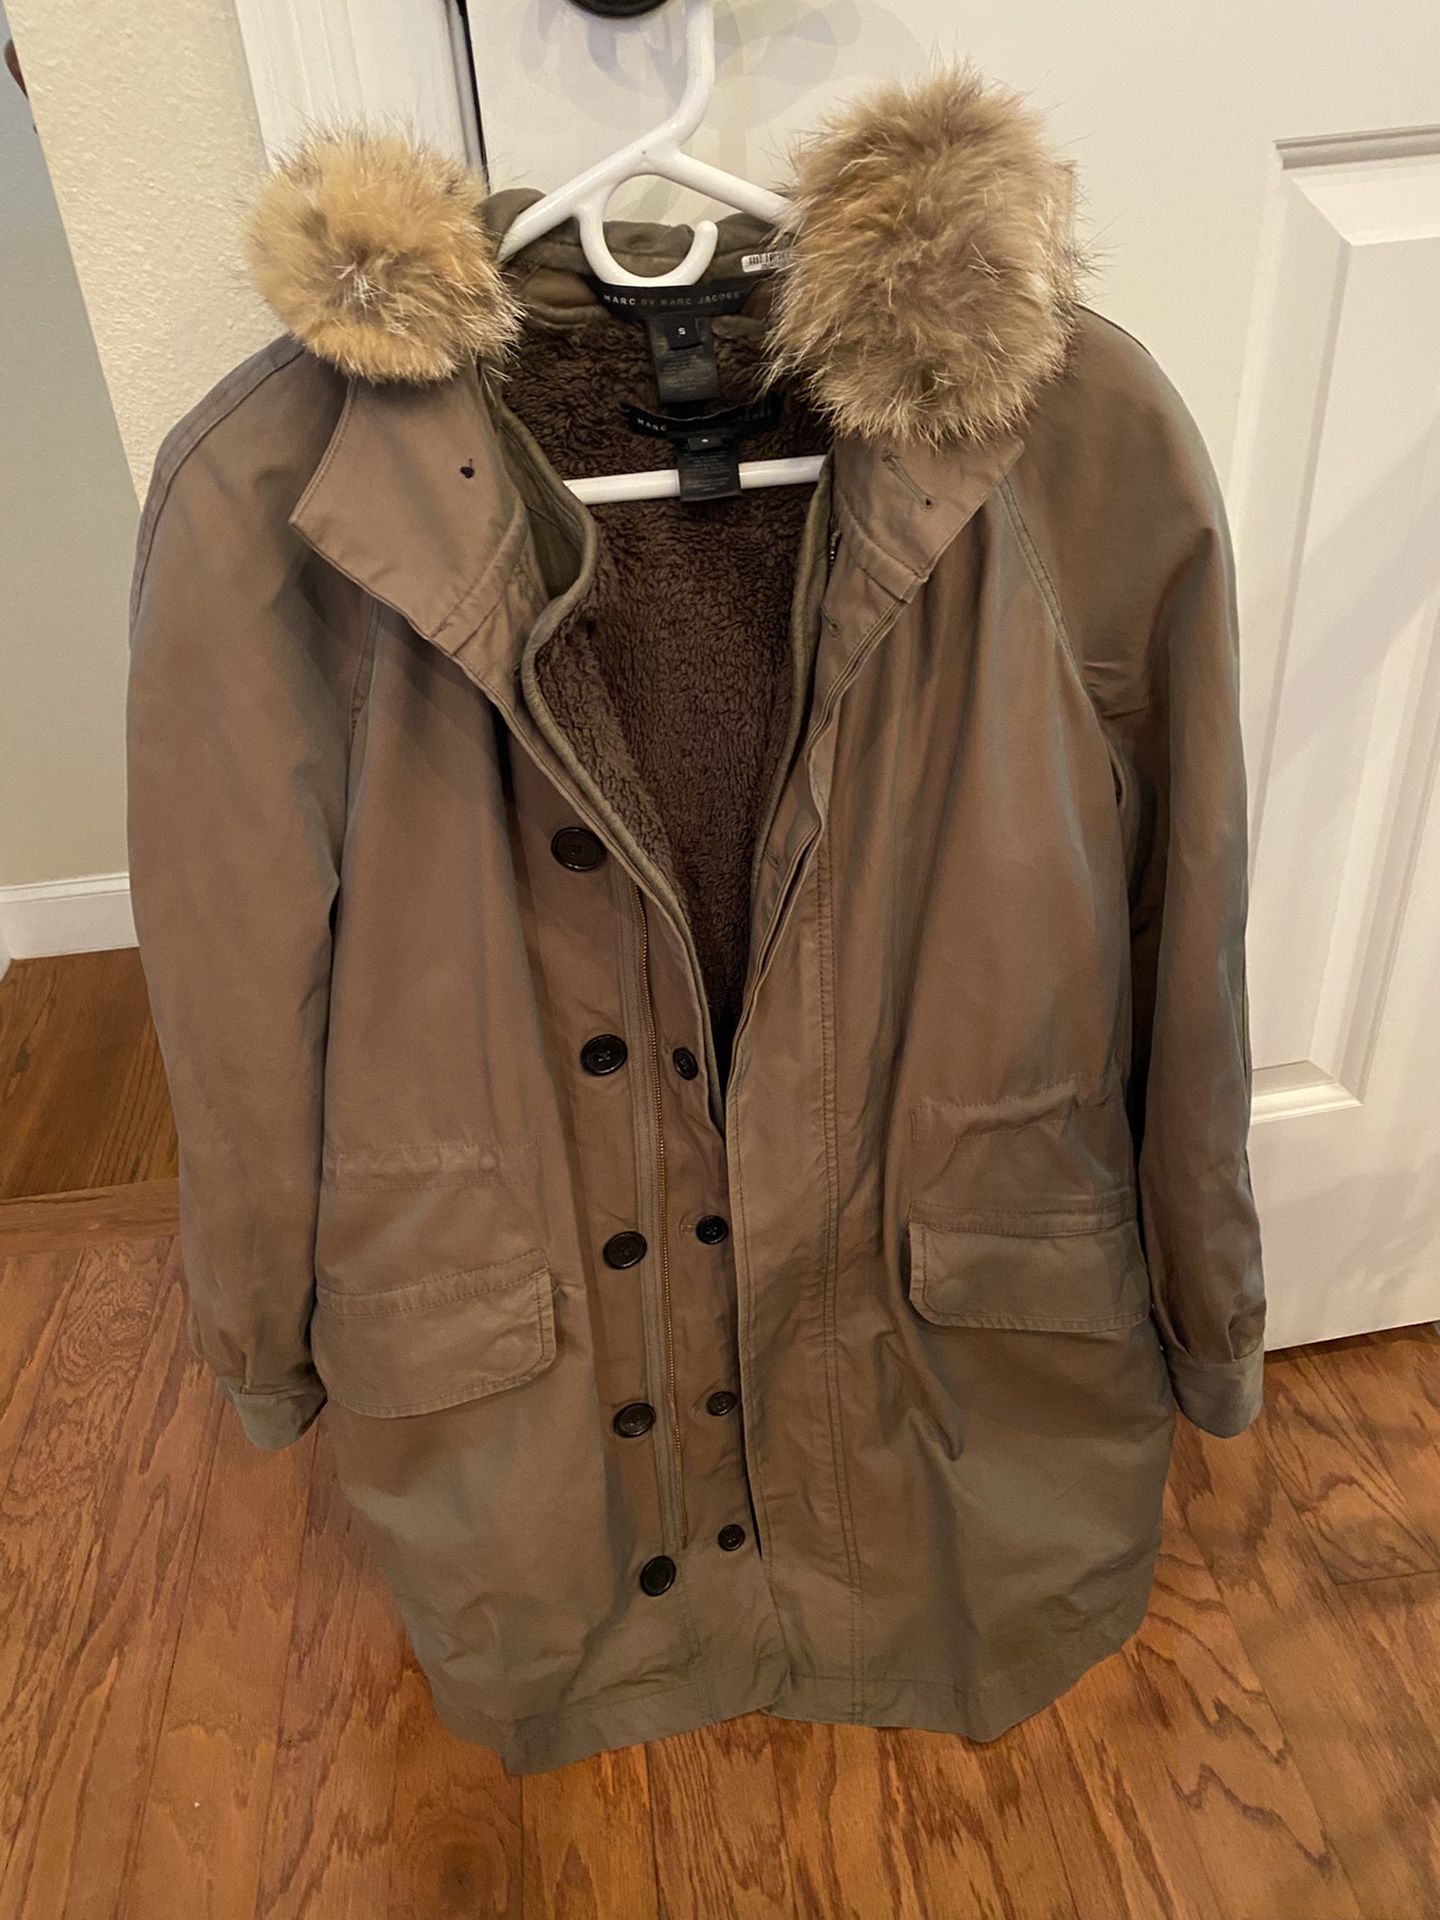 Marc Jacobs Army Marley Twill Parka Coat Fur Hood… Small